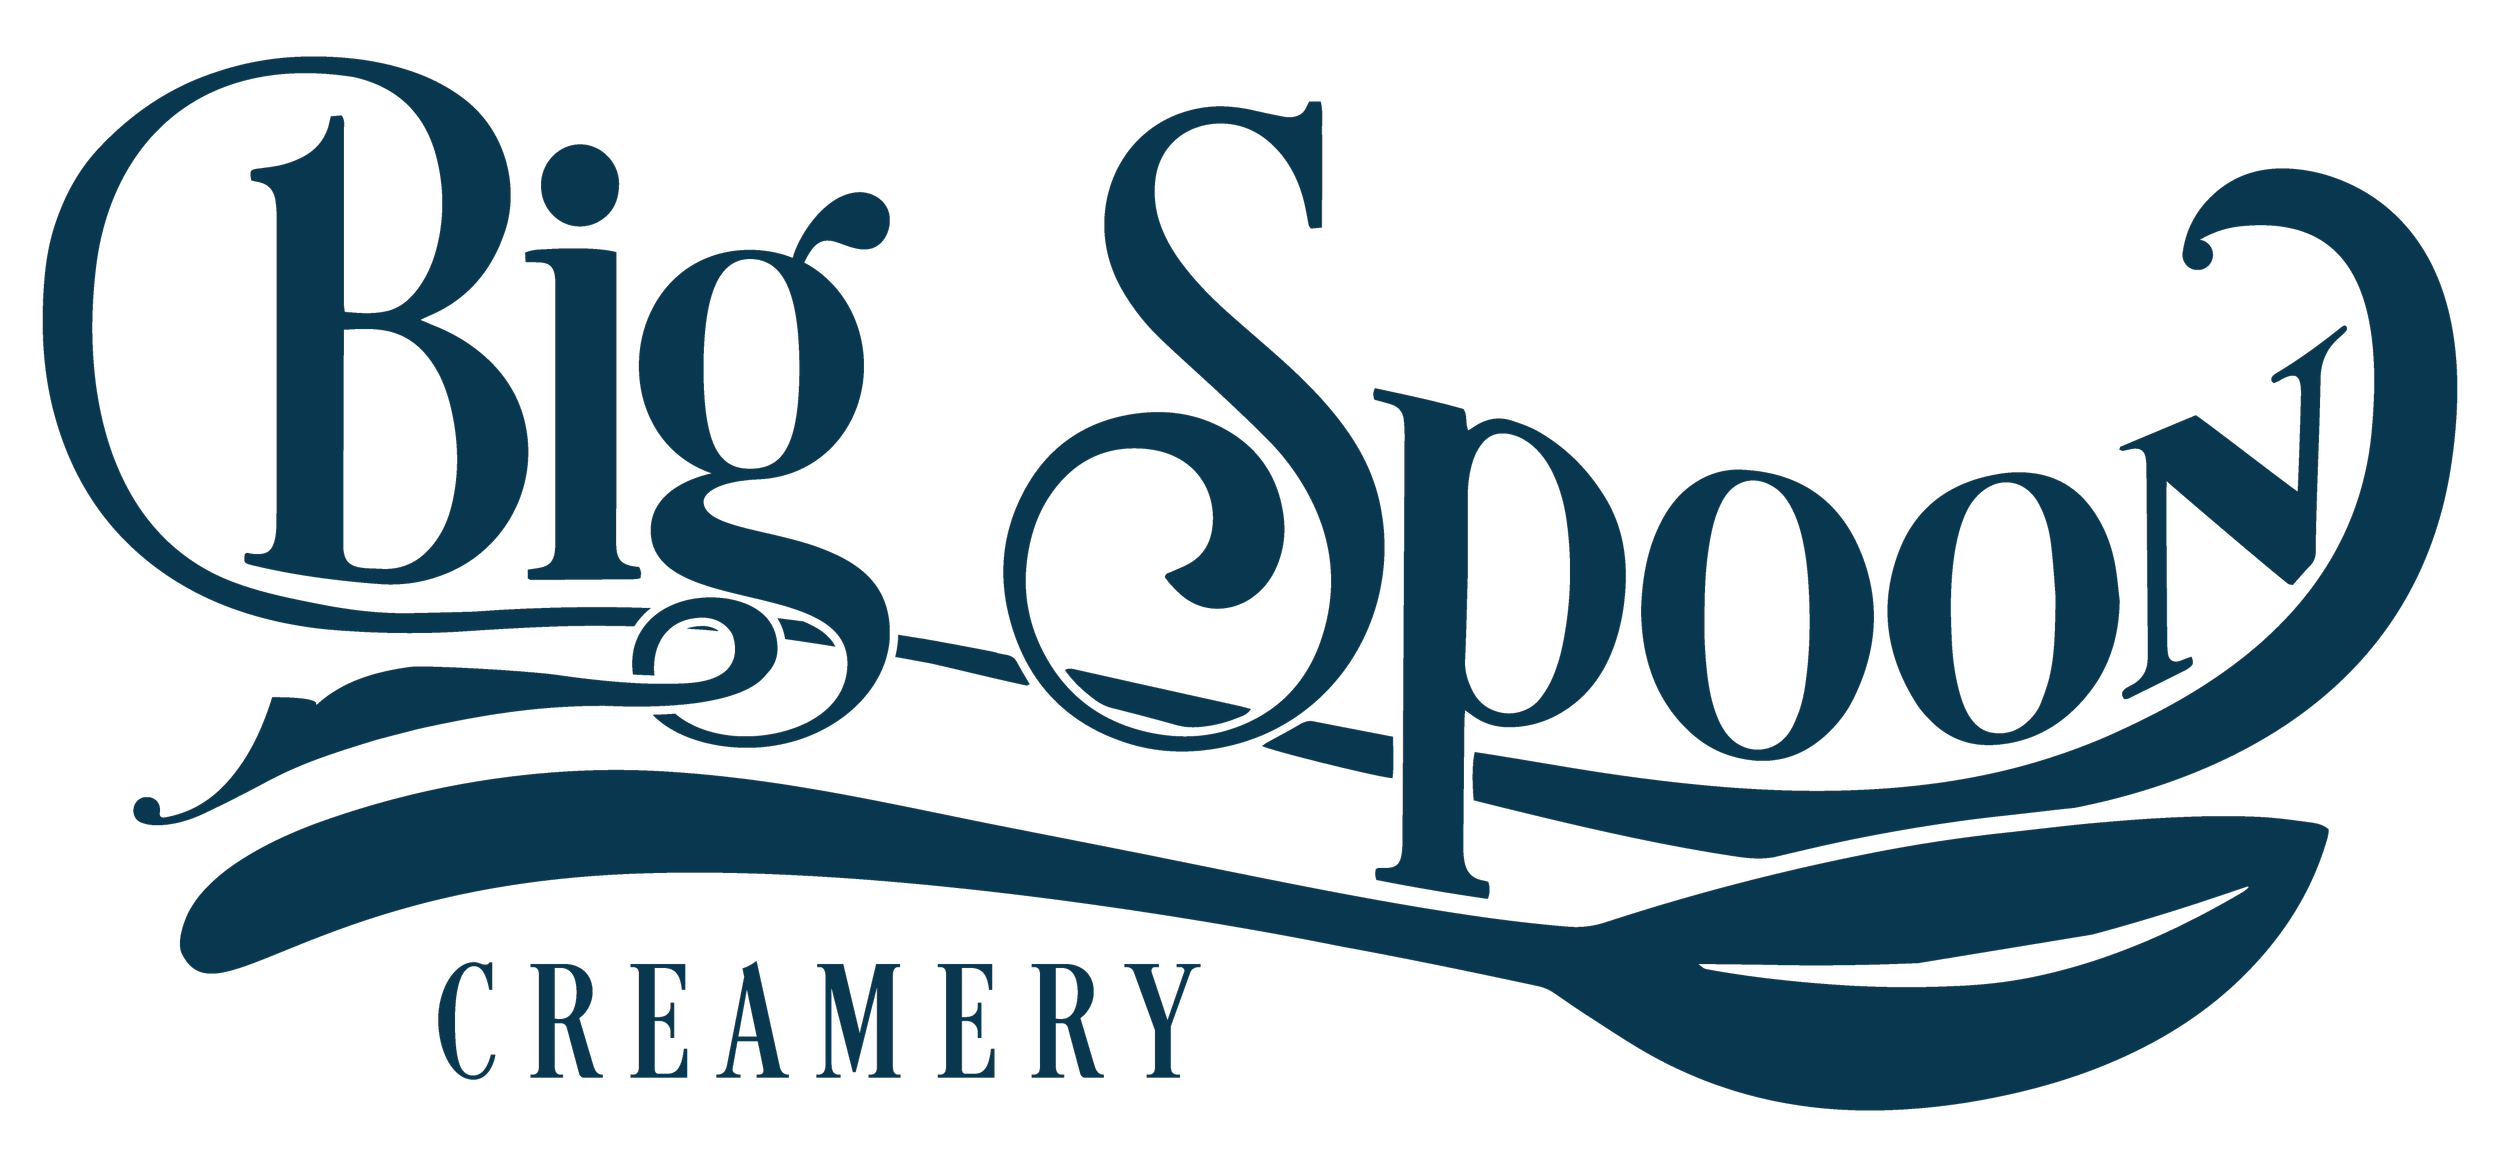 Big Spoon Creamery